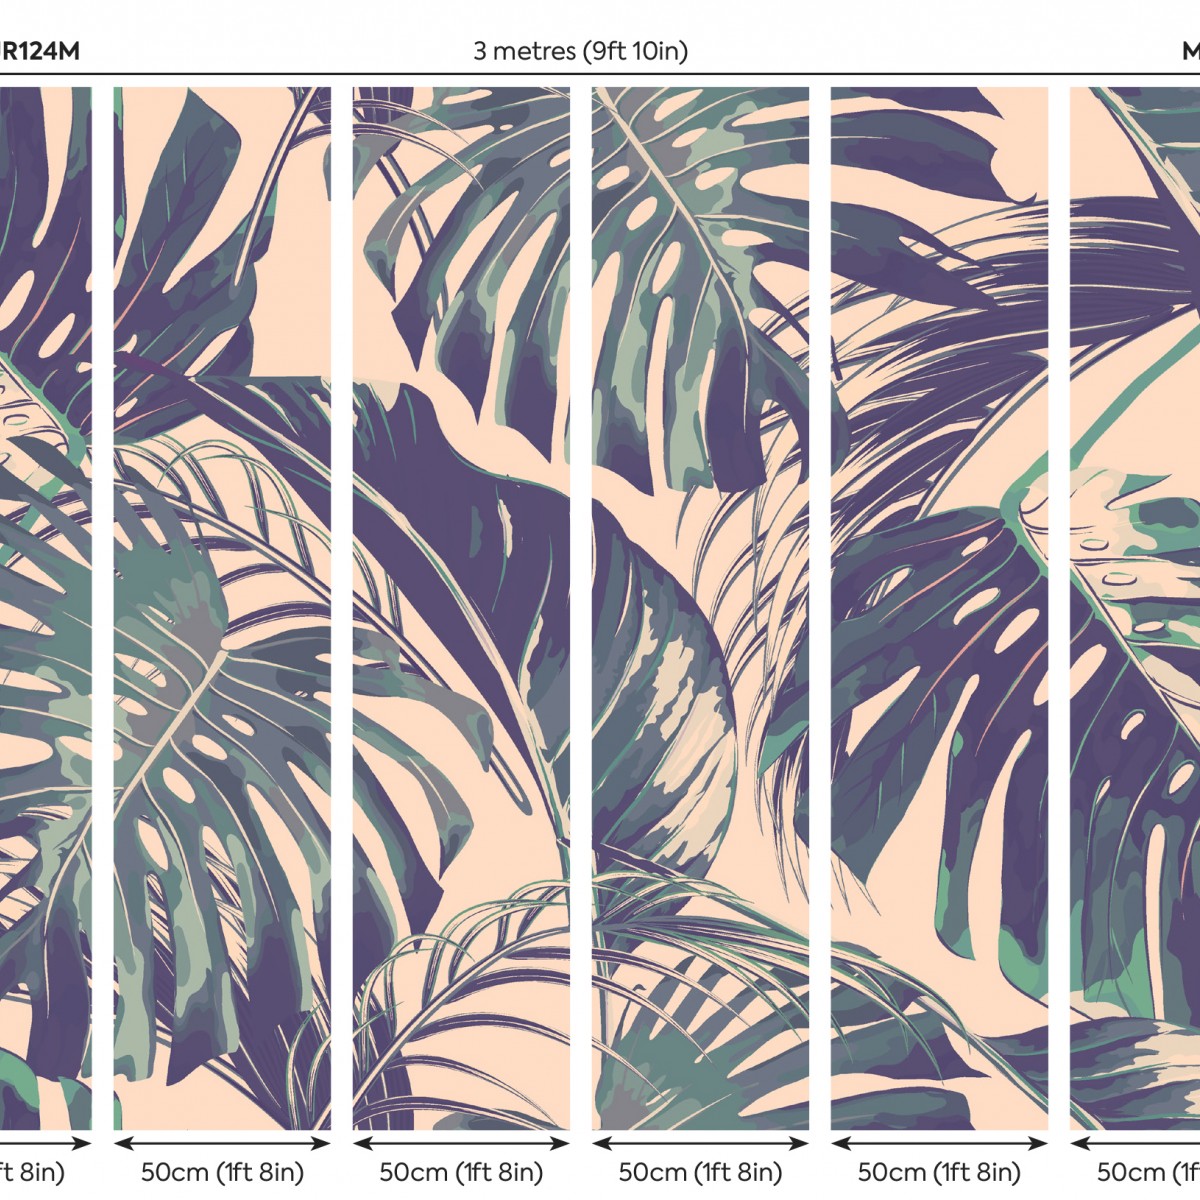 Fototapet Palm Leaves M, Blush & Jade, Origin Murals, 300x240cm,  